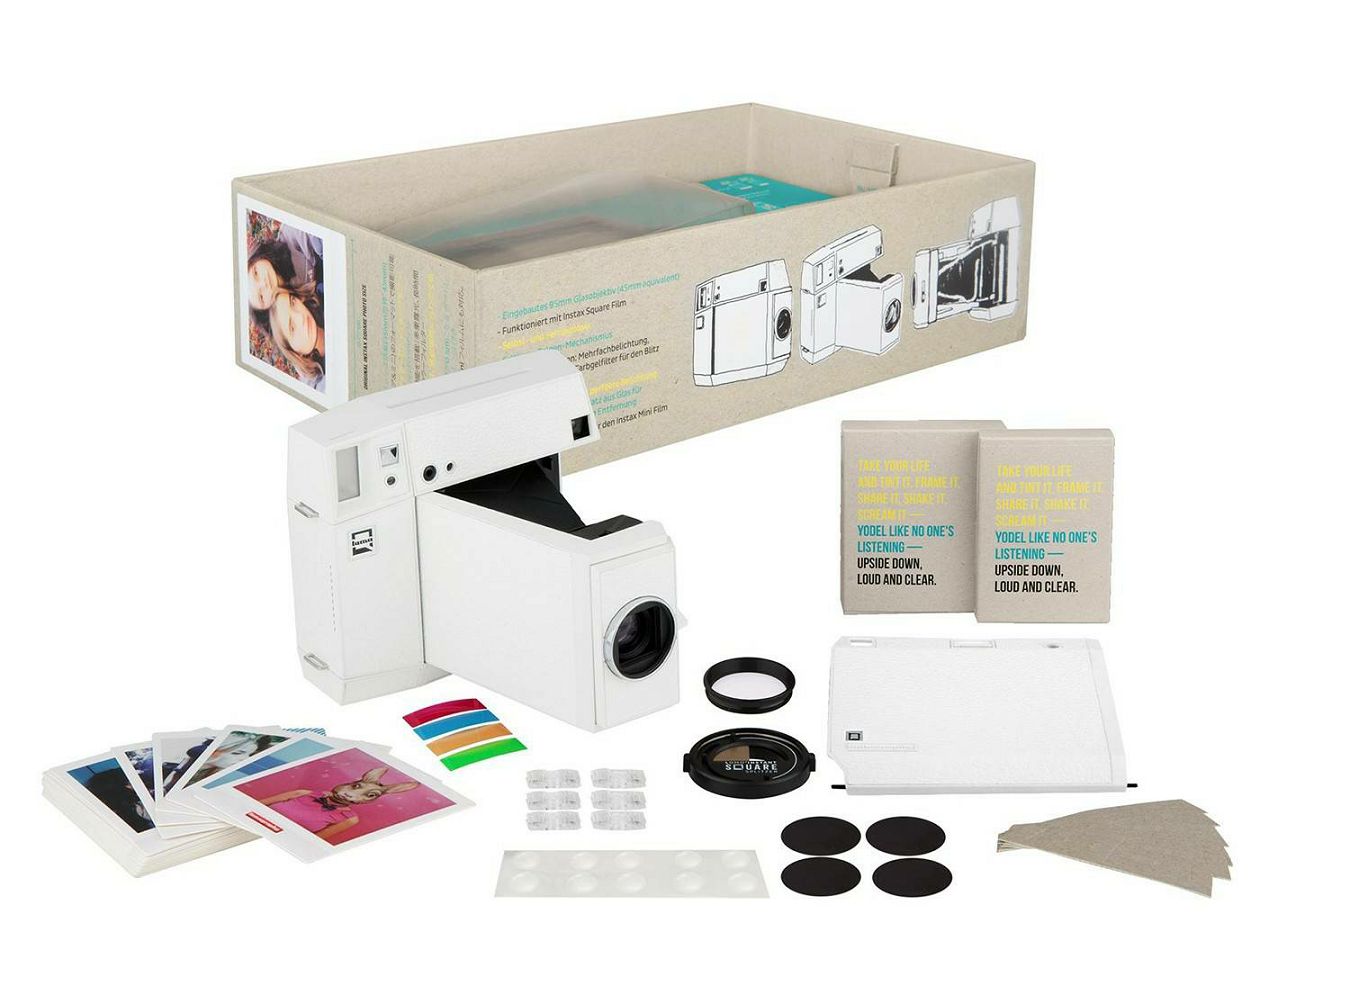 Lomography Lomo Instant Square Combo White (LI700W) polaroidni fotoaparat s trenutnim ispisom fotografije